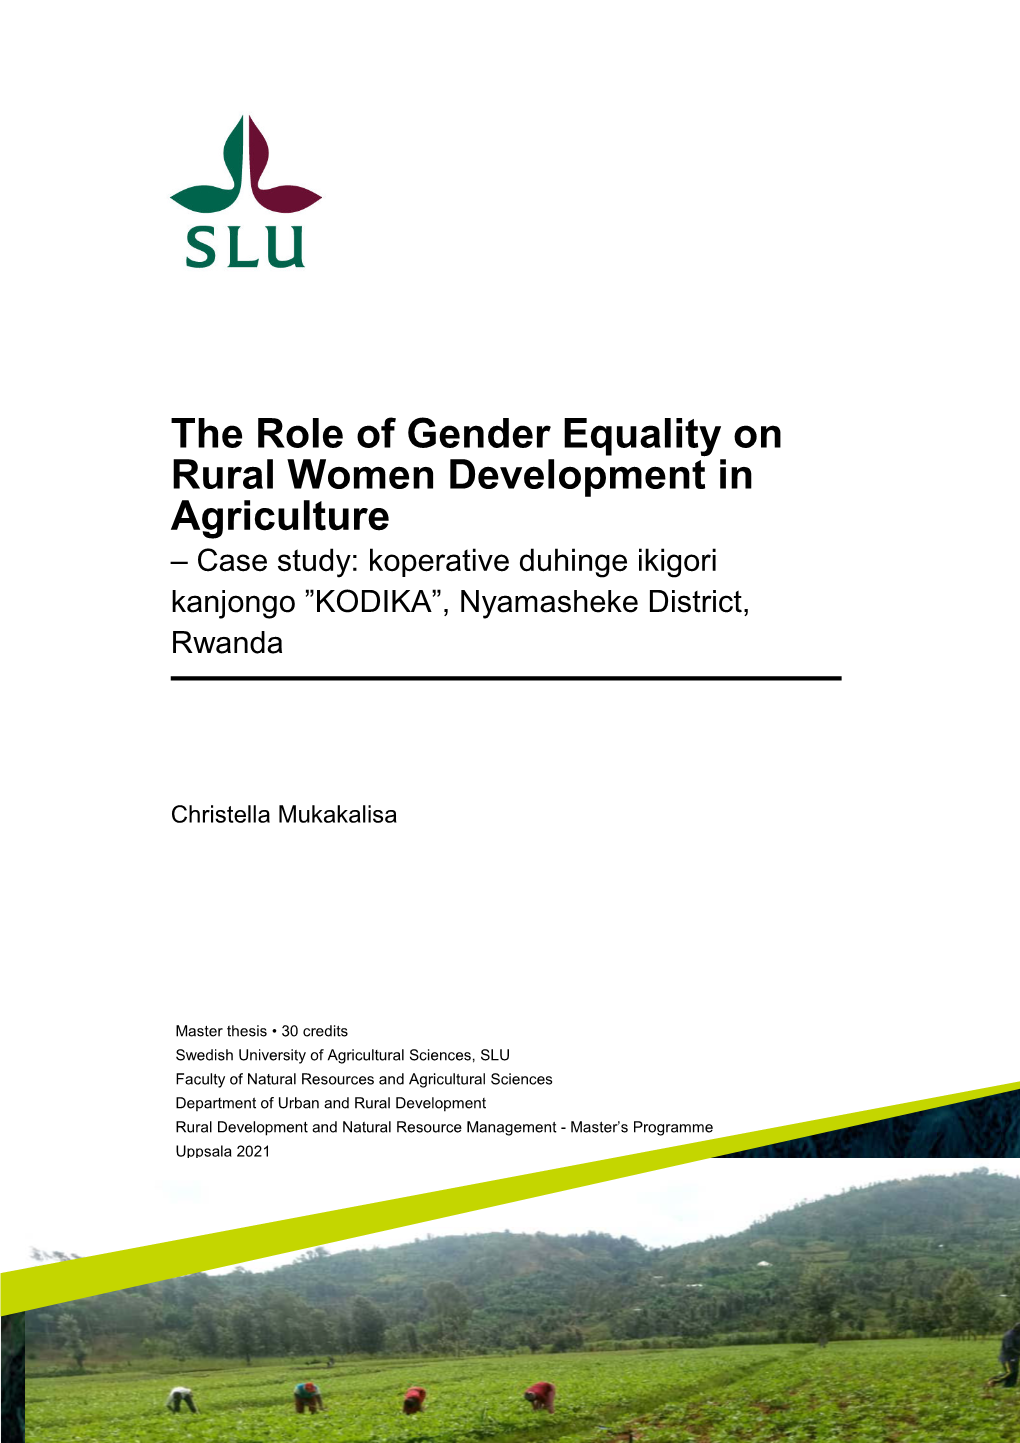 The Role of Gender Equality on Rural Women Development in Agriculture – Case Study: Koperative Duhinge Ikigori Kanjongo ”KODIKA”, Nyamasheke District, Rwanda